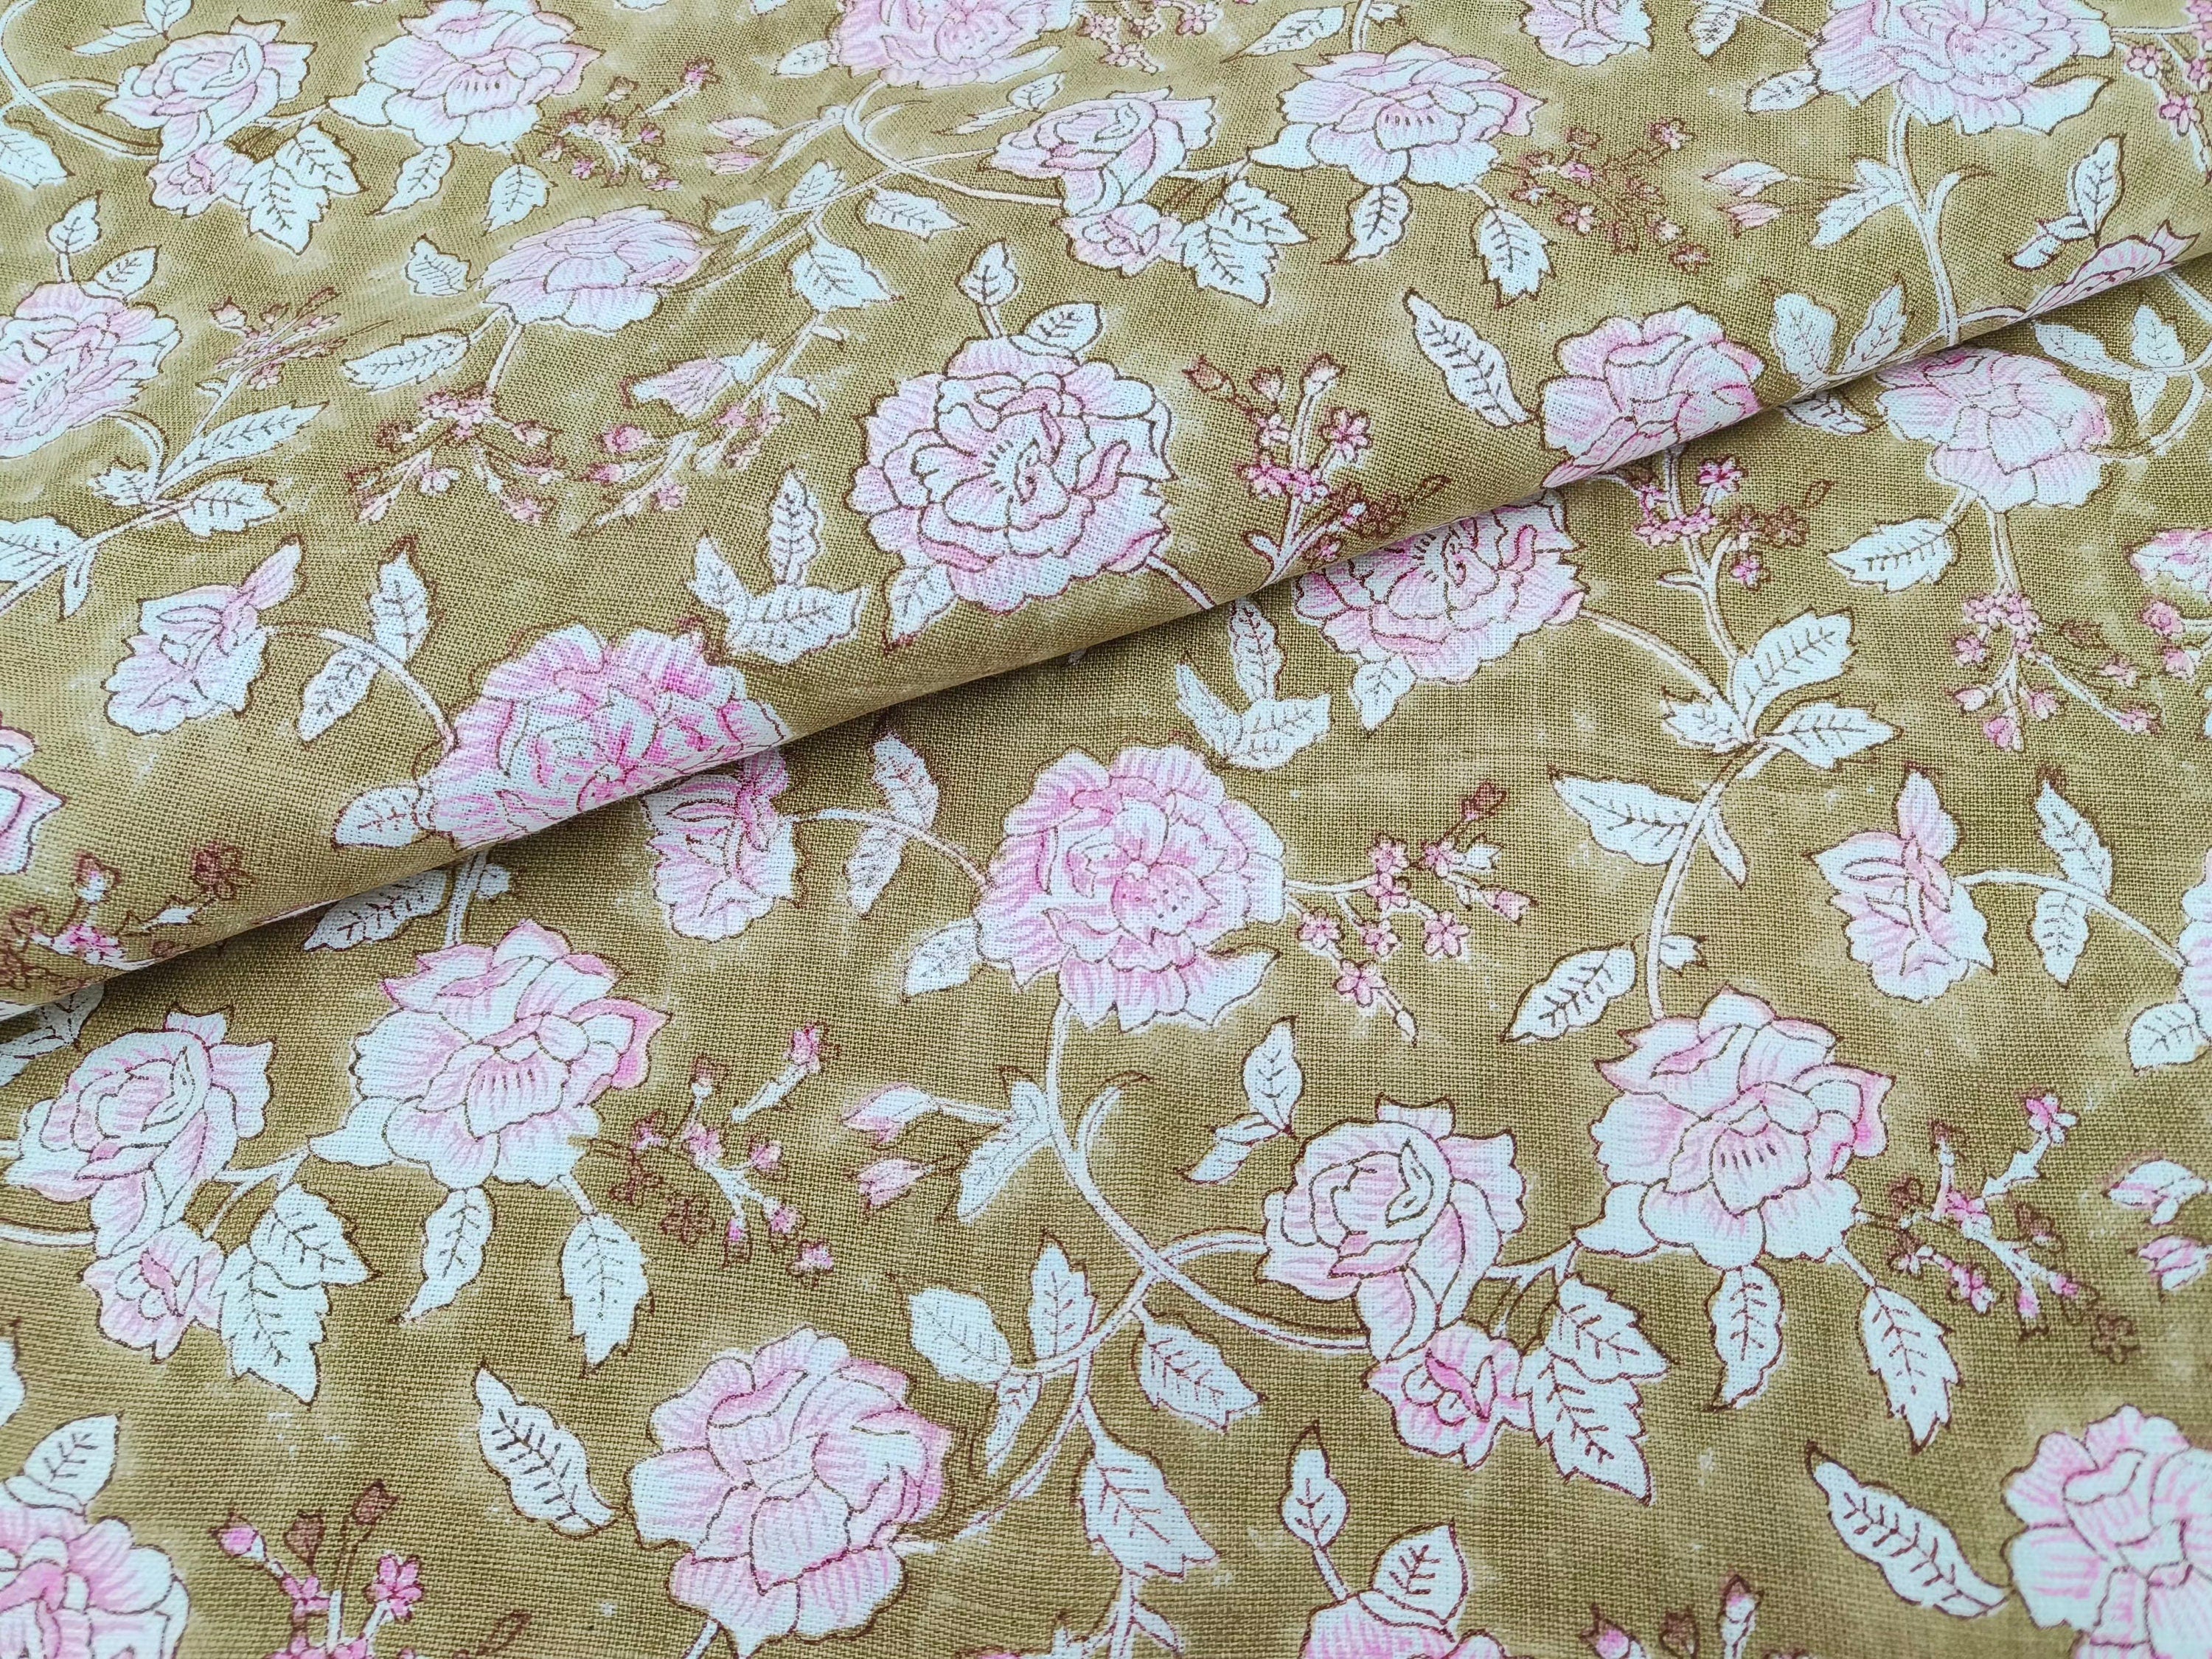 Block Print Linen Fabric, Rameshwaram  Pure Linen White Base Cushion Fabric, Khaki Pink Printed Fabric For Throw Pillow, Hand Block Printed Linen, Floral Print 